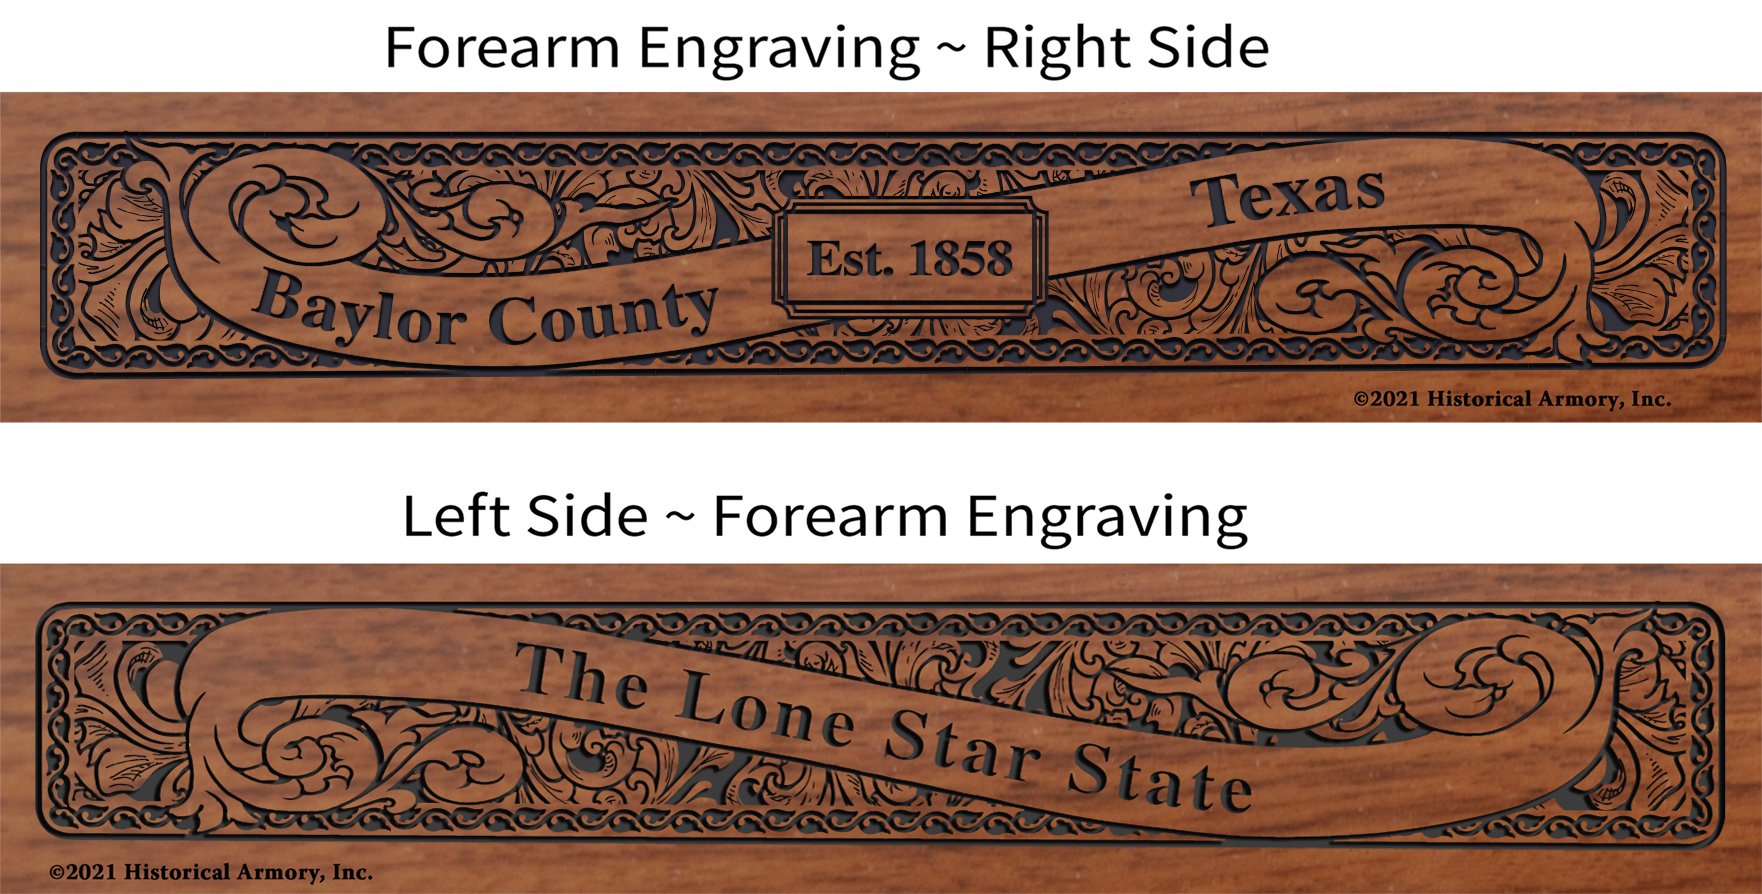 Baylor County Texas Establishment and Motto History Engraved Rifle Forearm